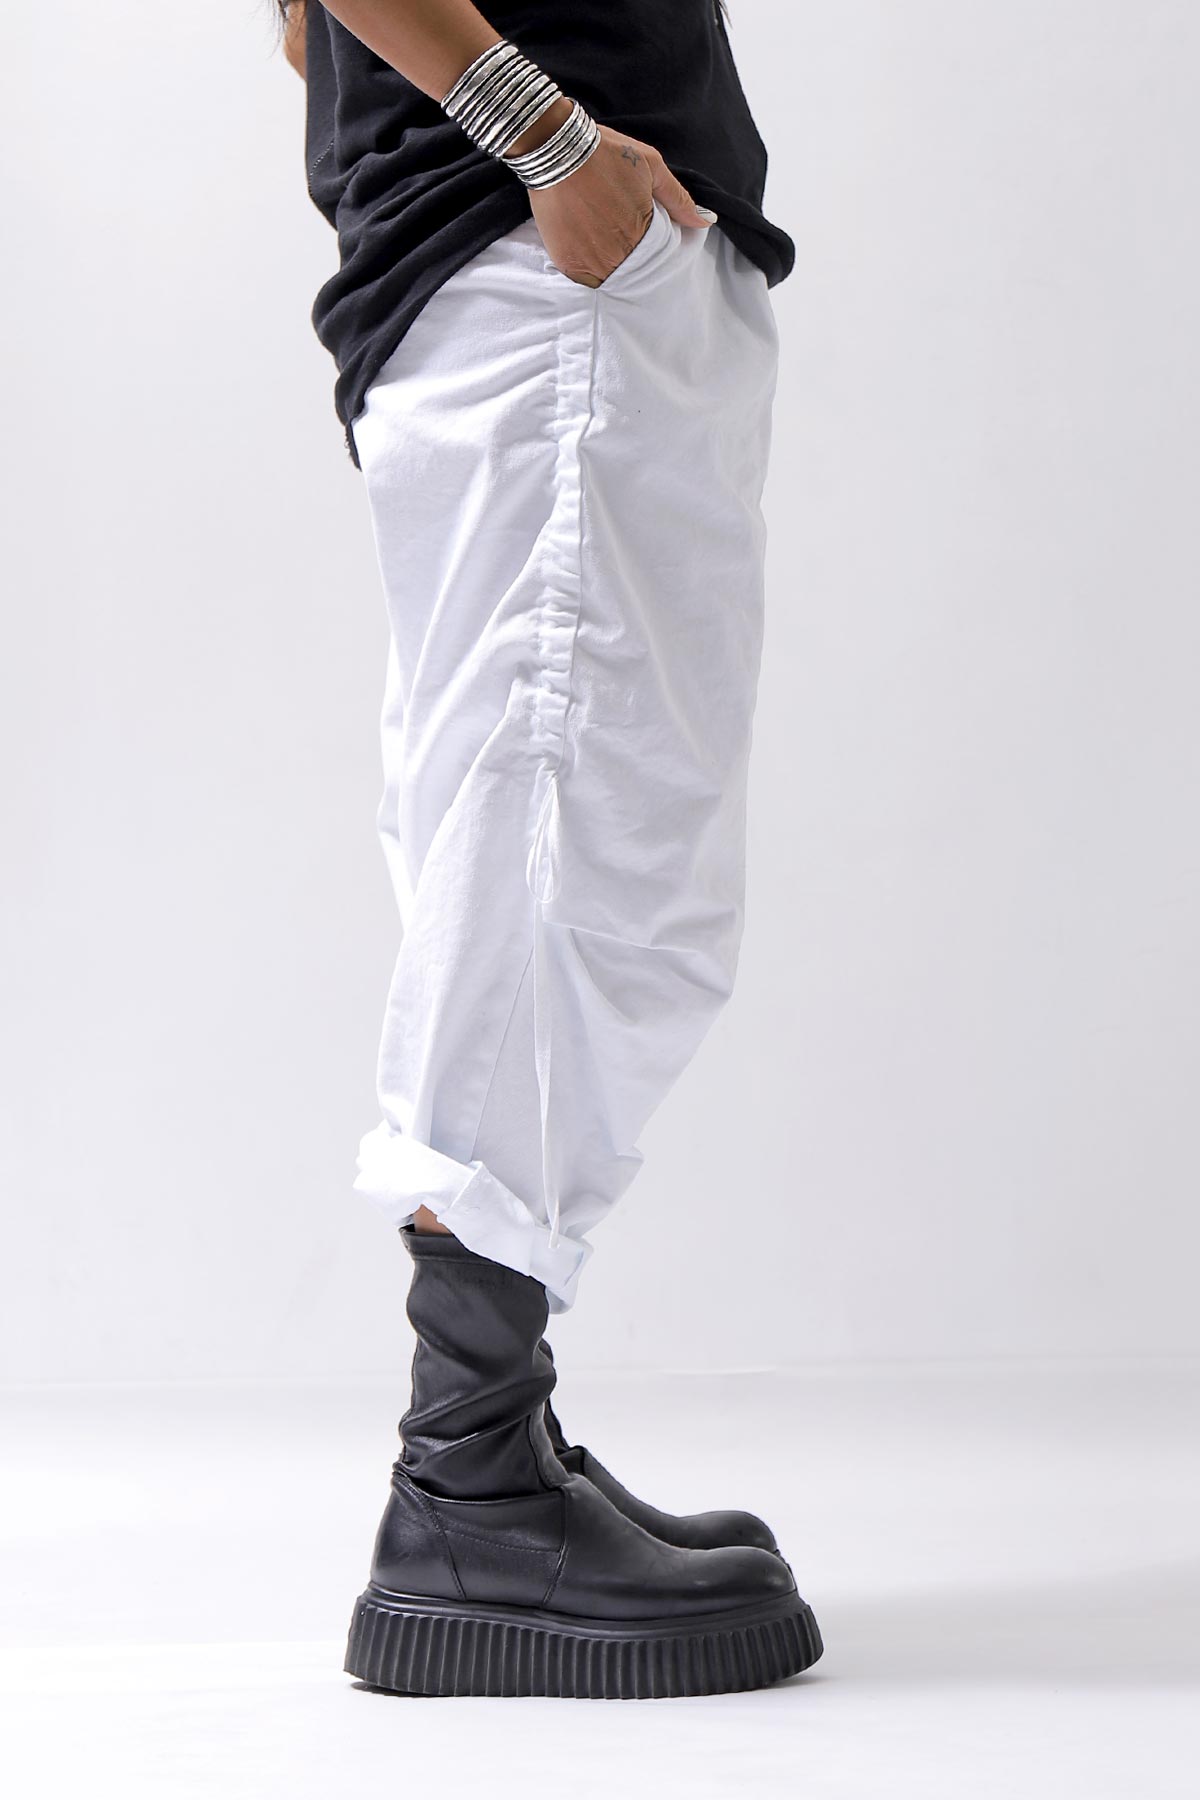 【sanctamuerte】 UNISEX SIDE STRING CODE PANTS 319/MM_PURE WHITE